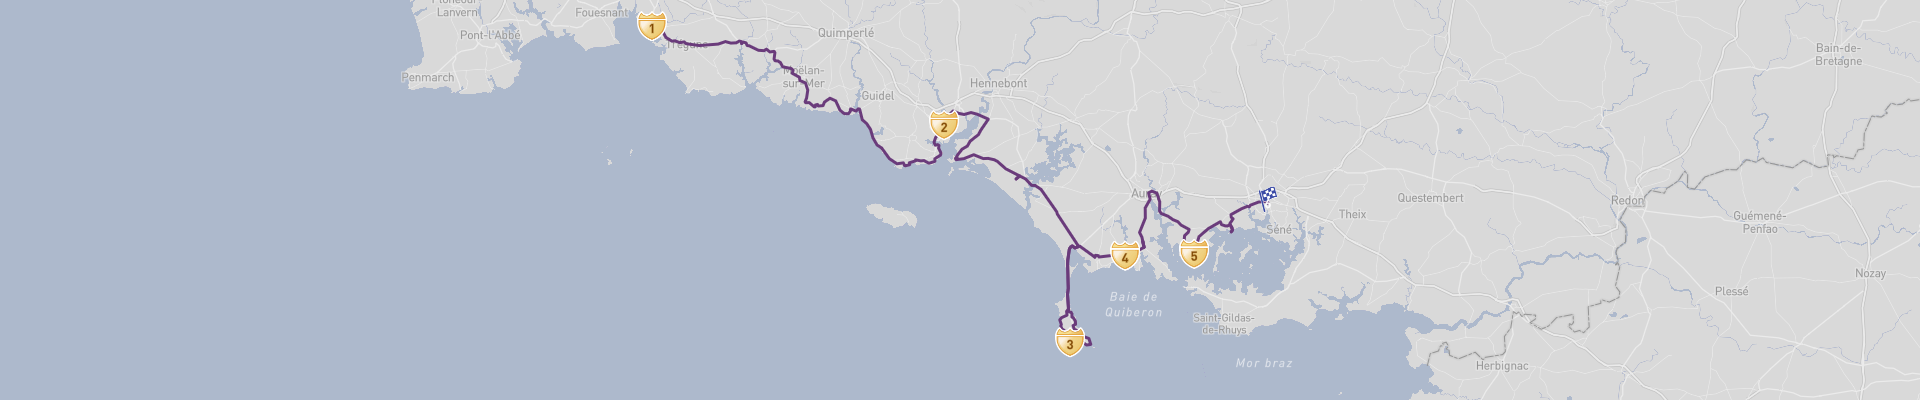 Itinerario del Golfo de Morbihan